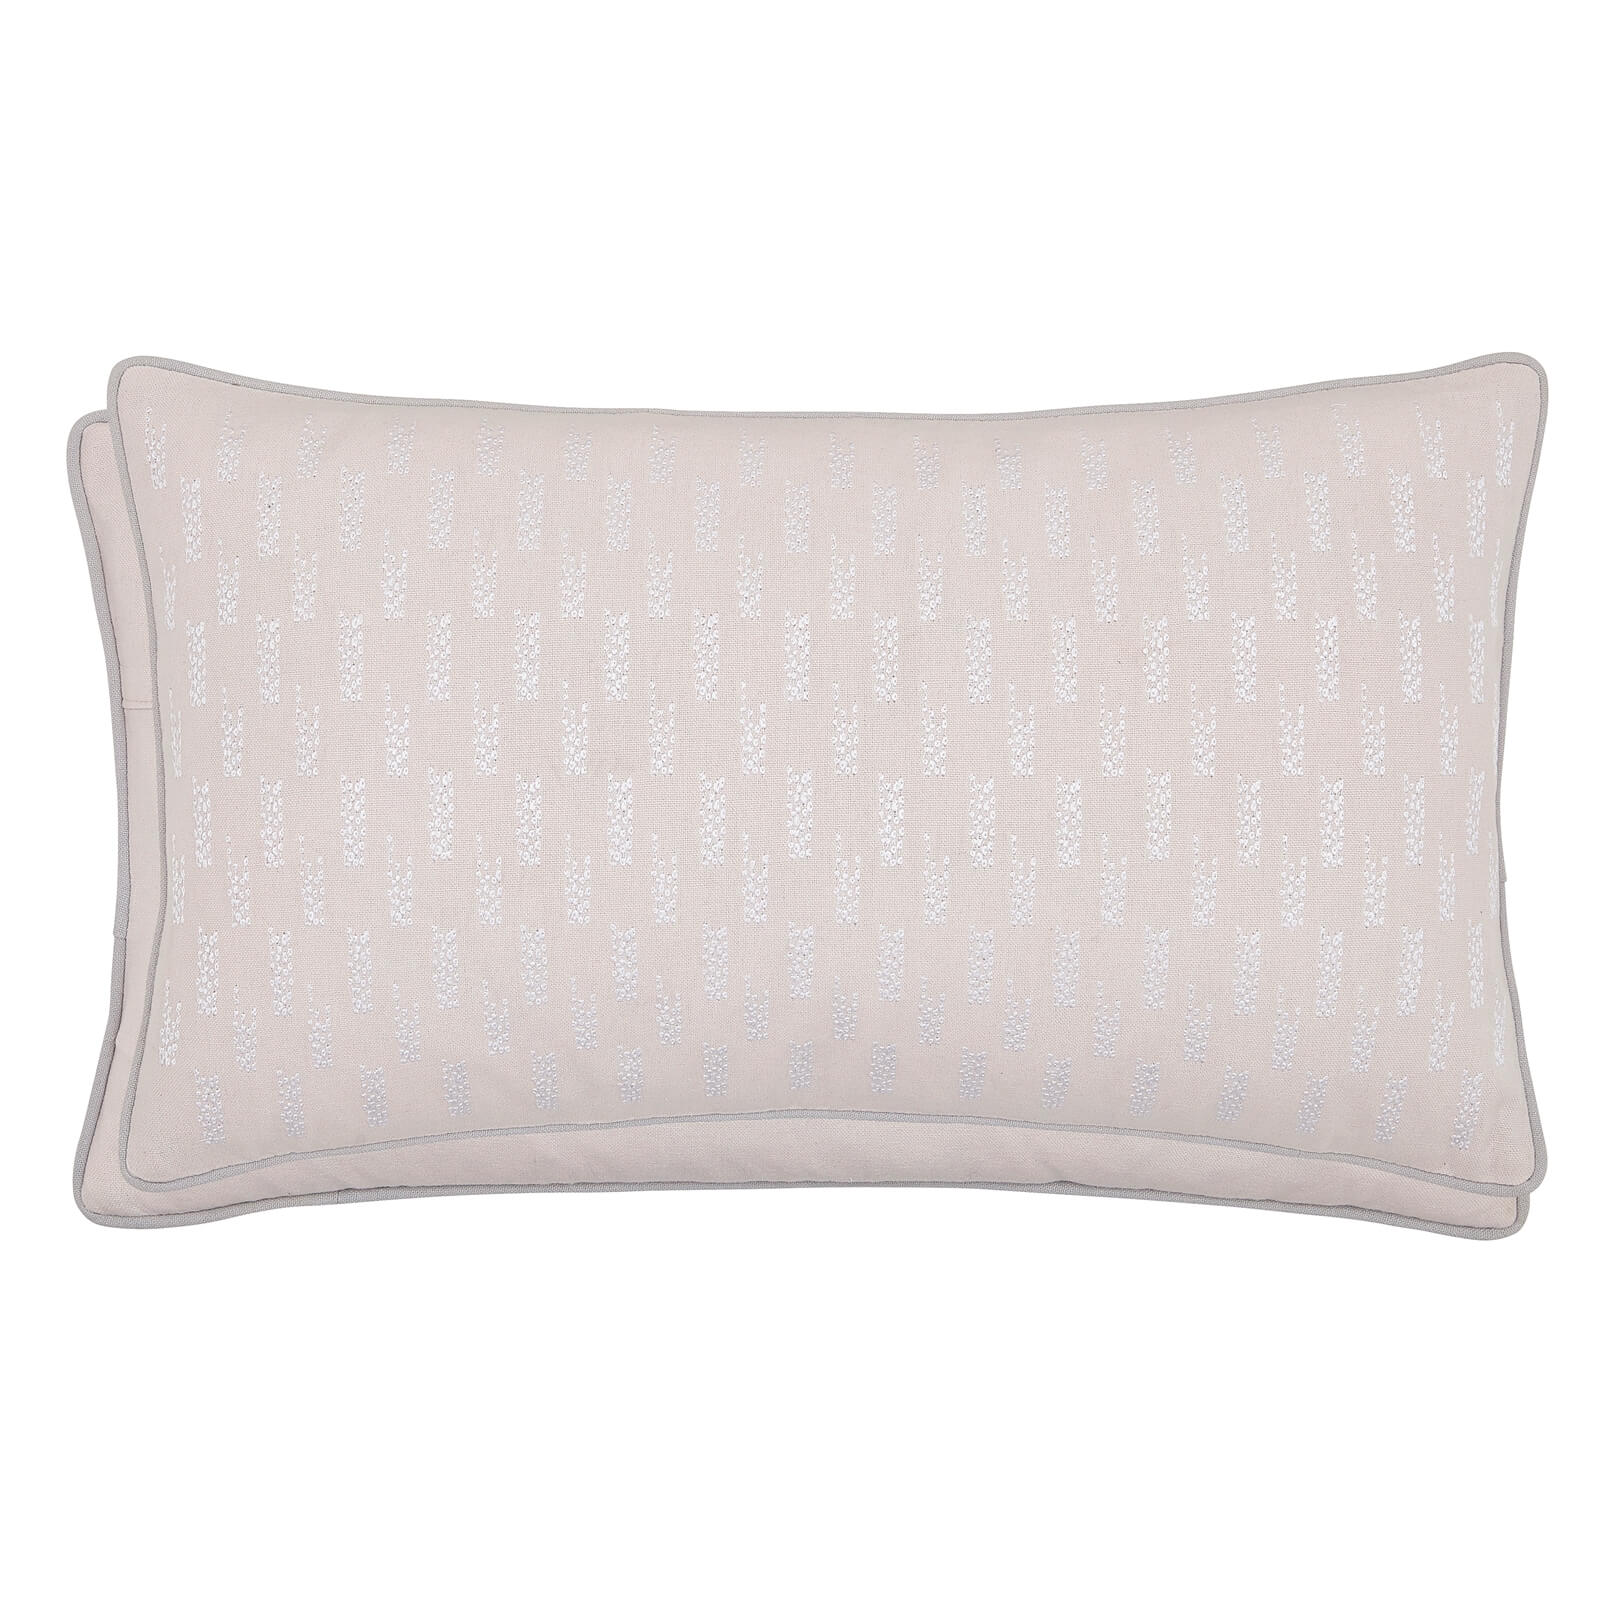 Murmur Misti Cushions 50x30cm - Blush